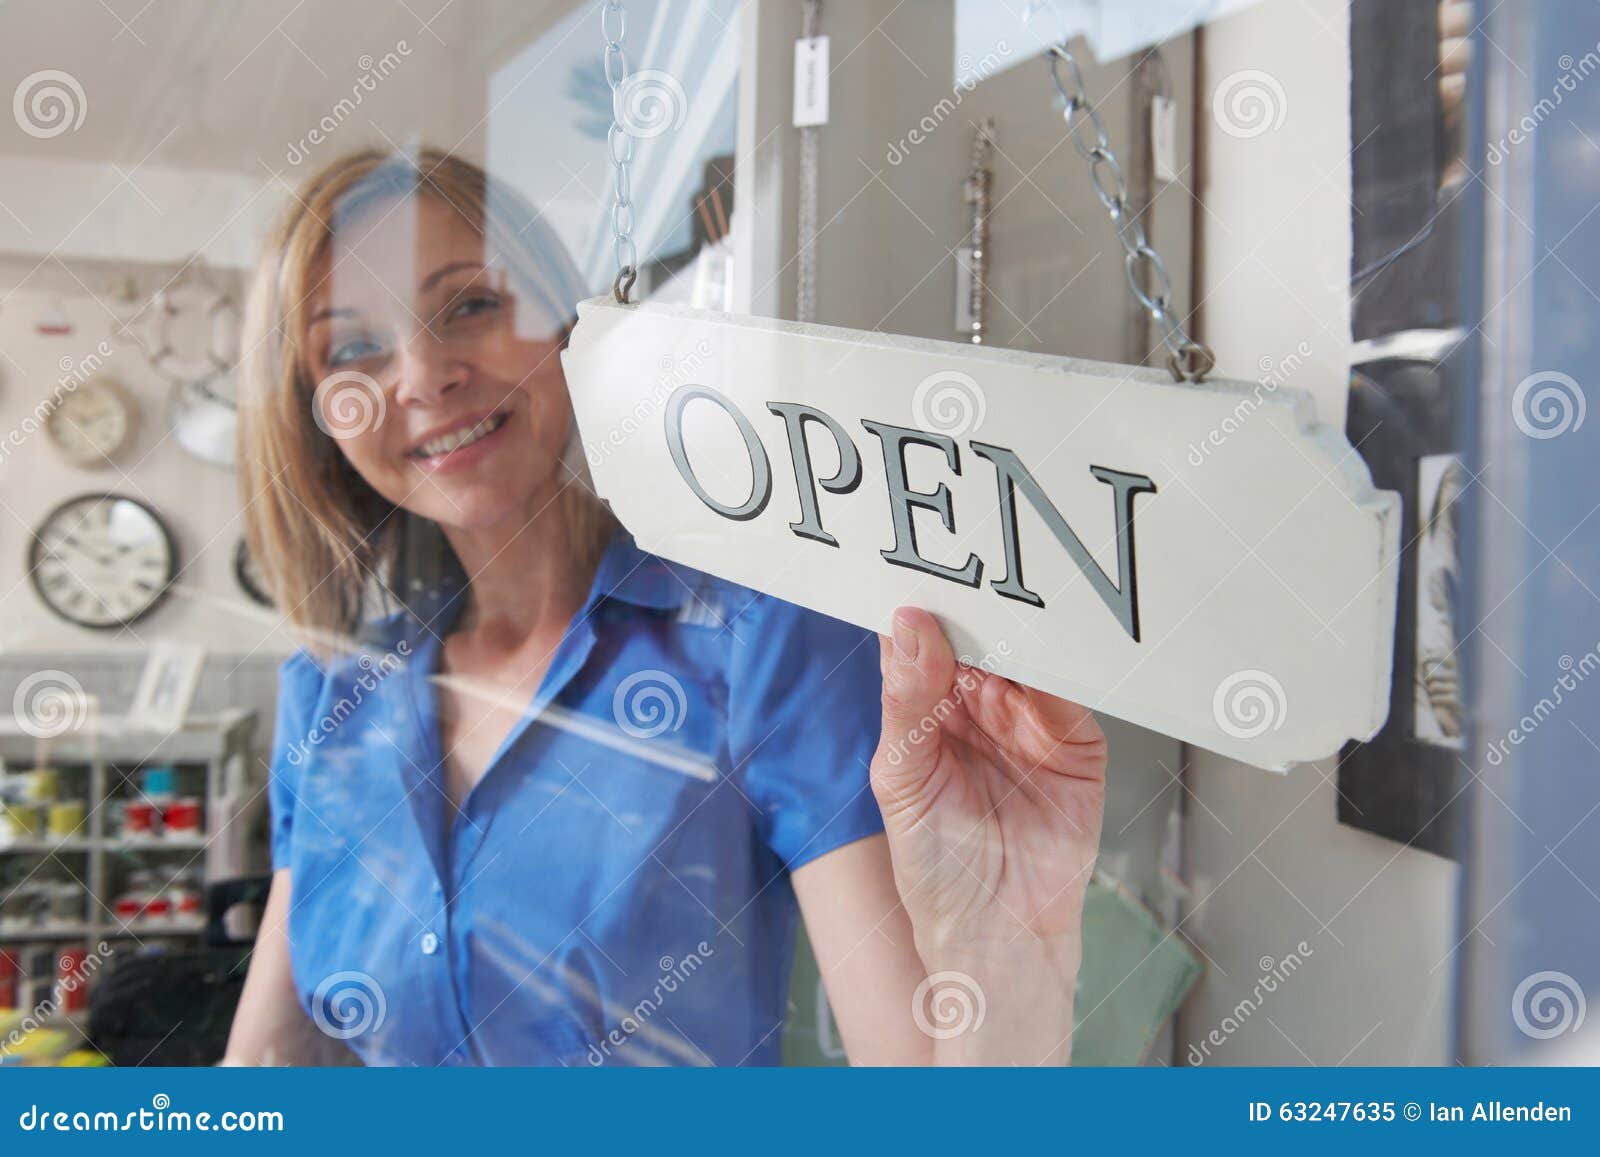 store owner turning open sign in shop doorway